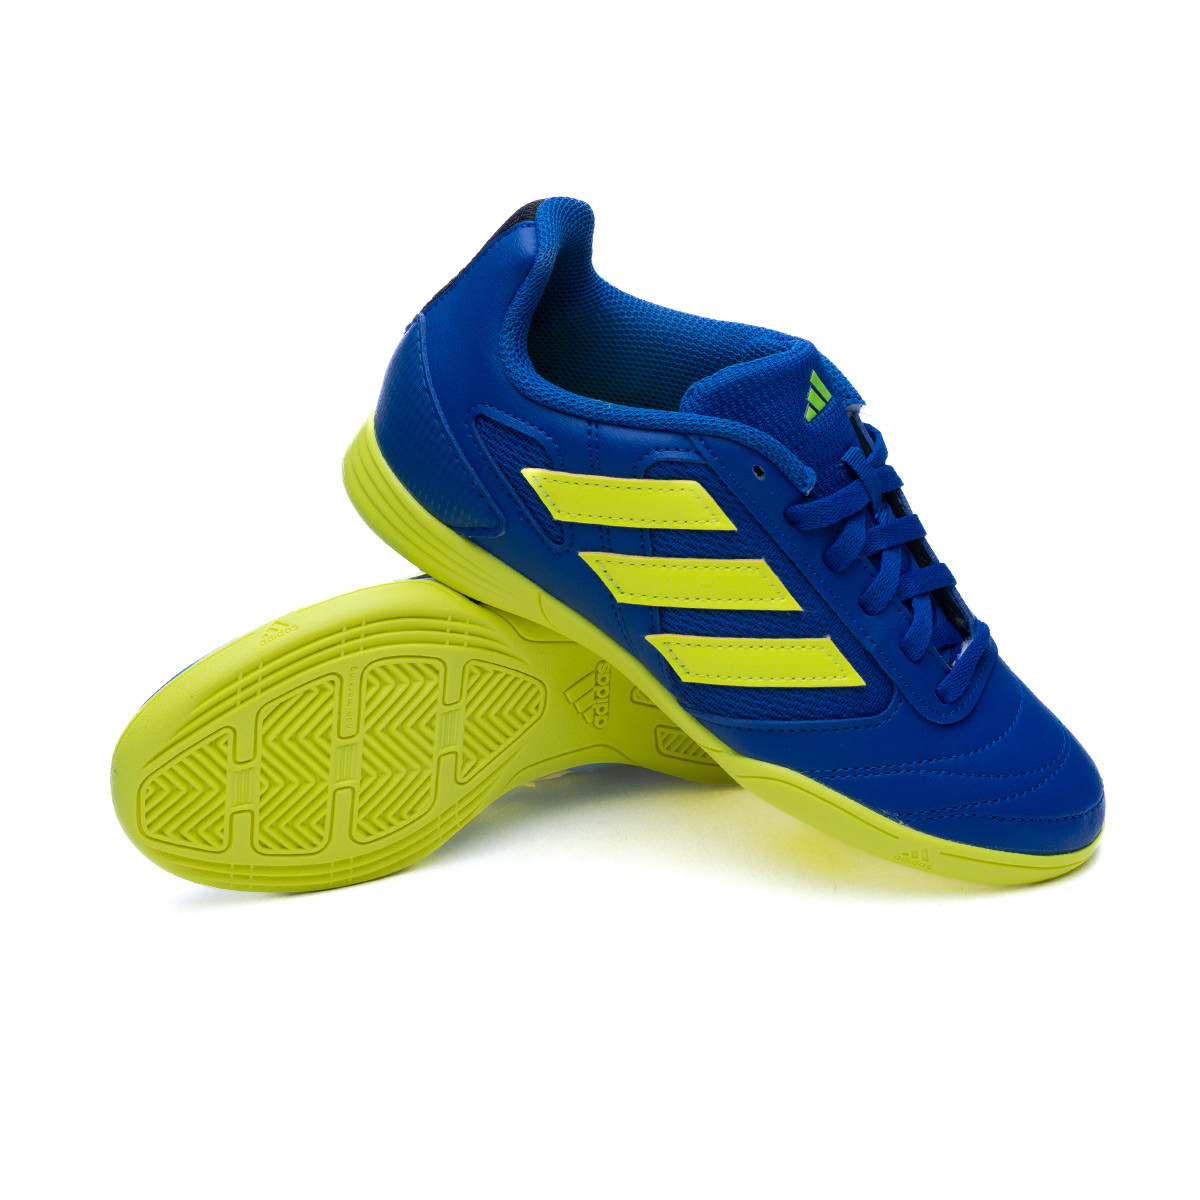 Chaussure de futsal Adidas au meilleur prix - FutsalStore